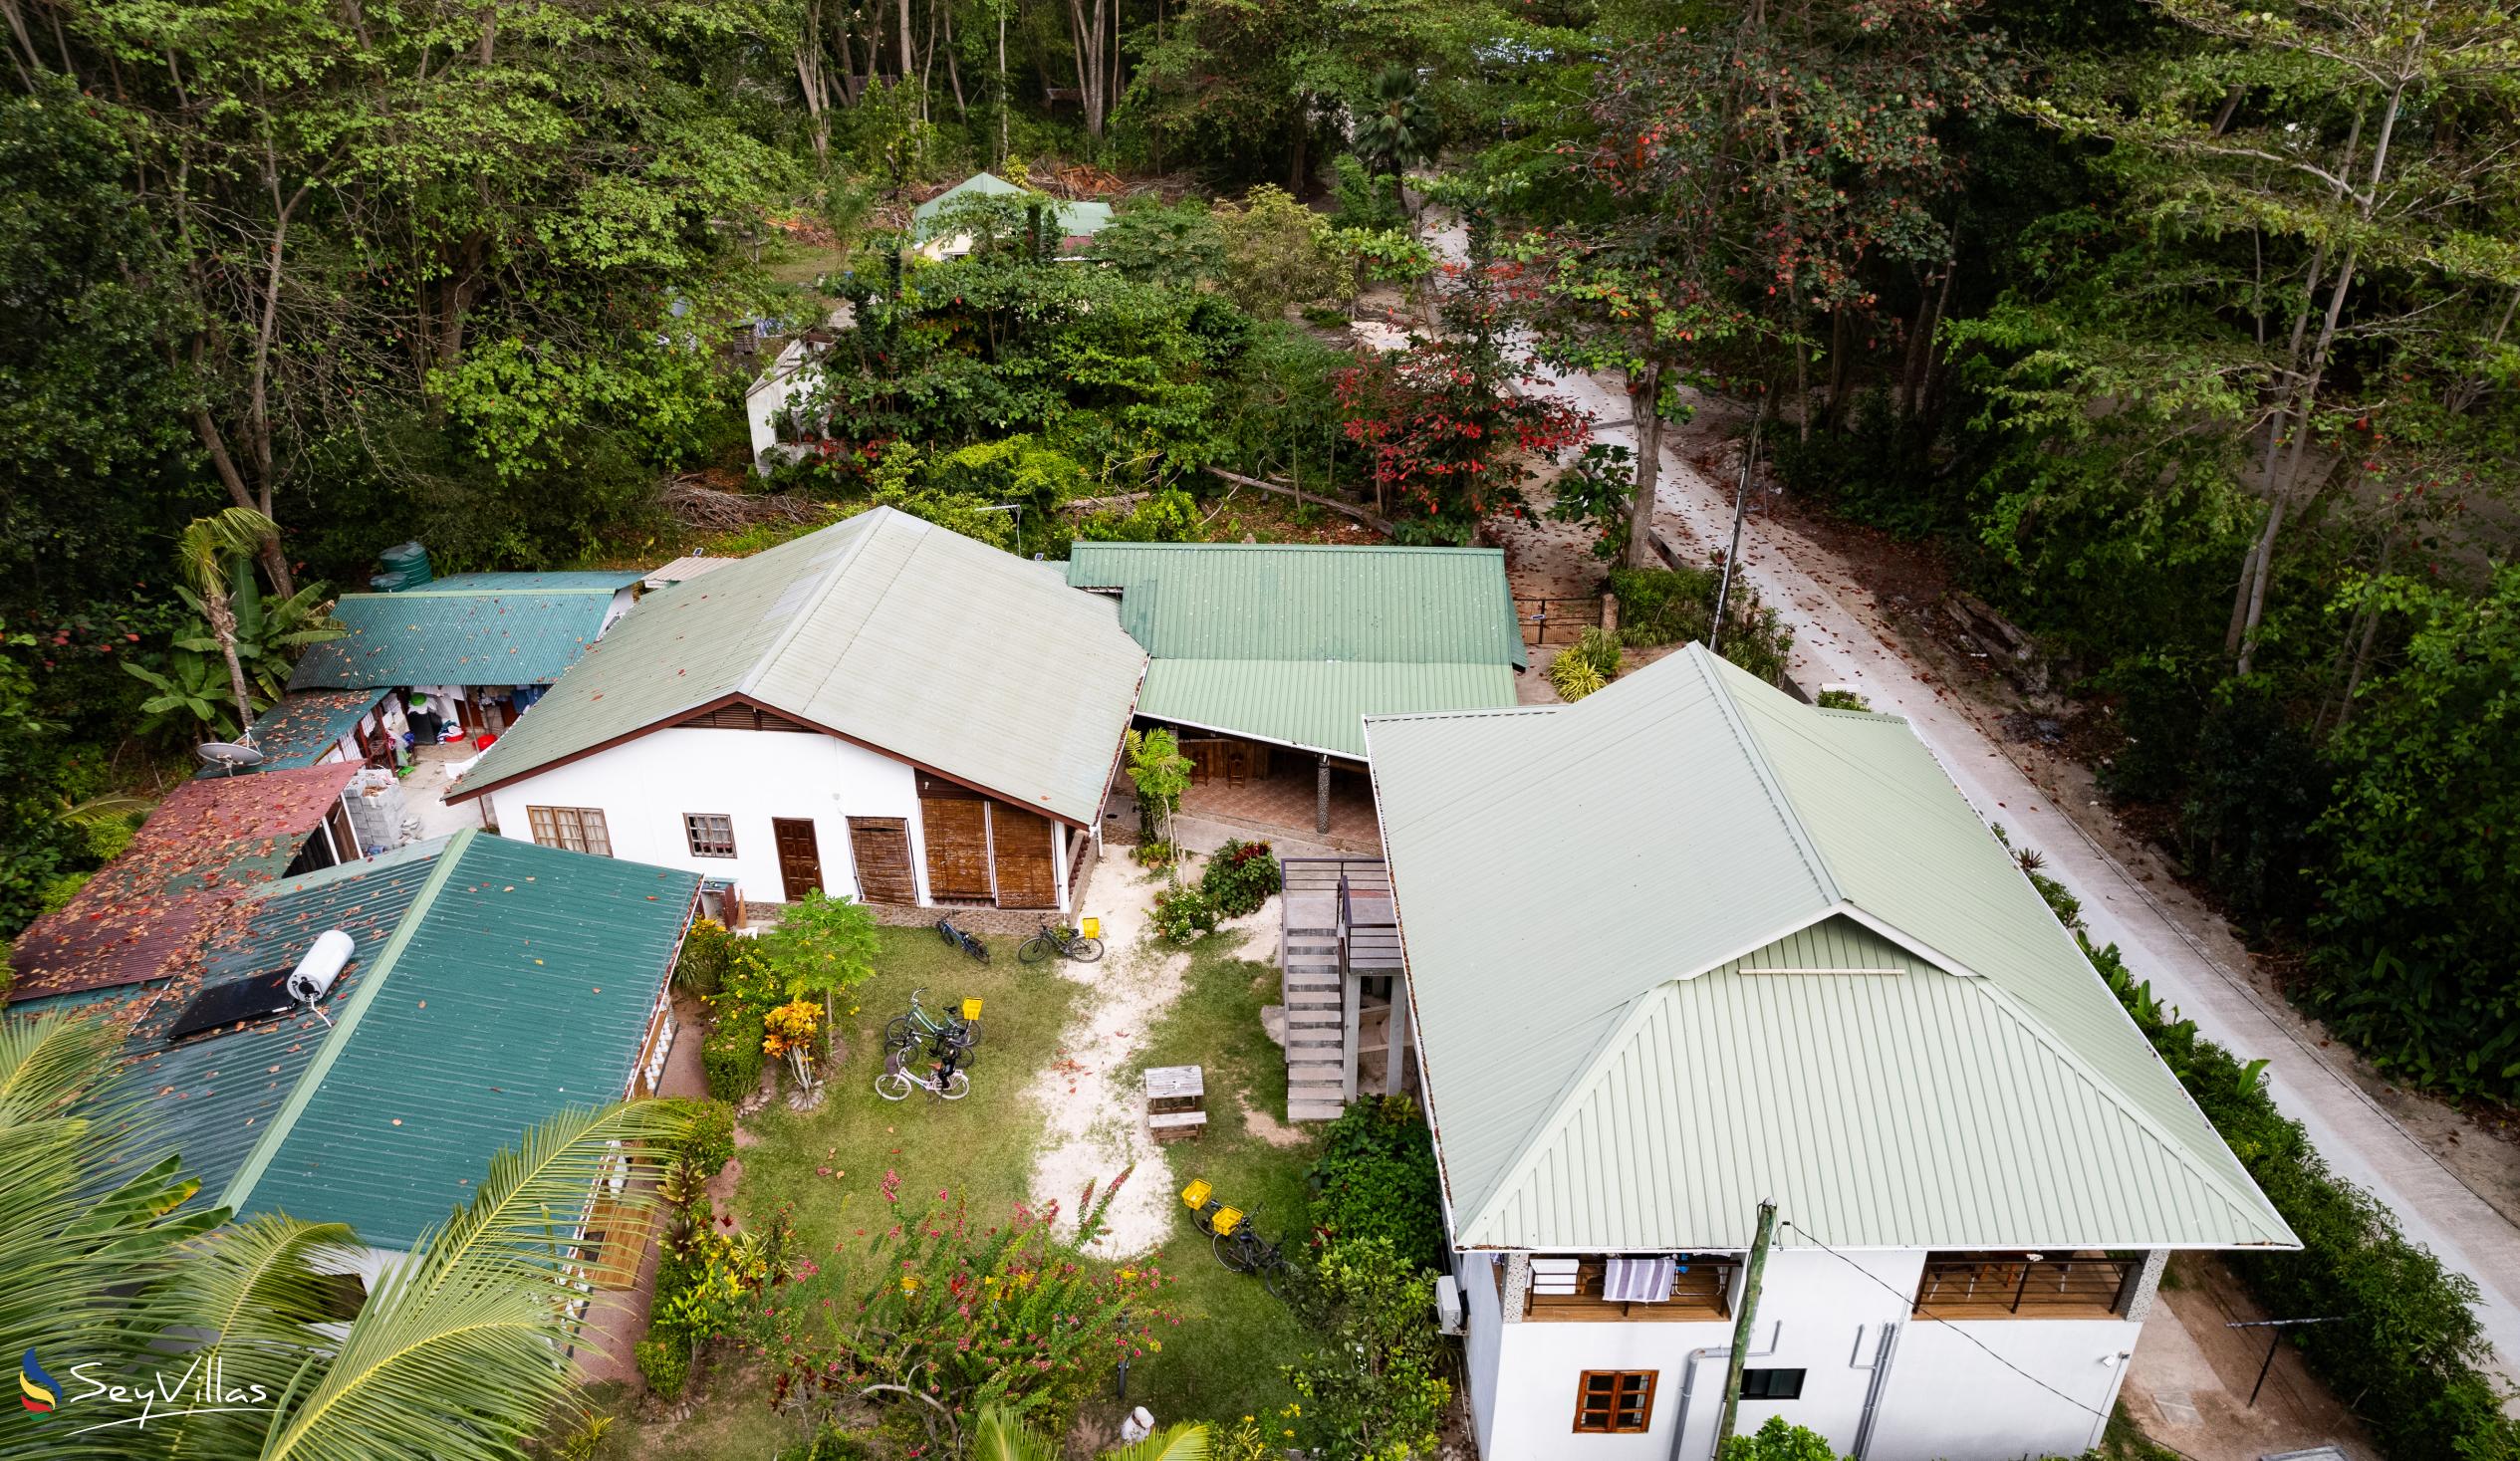 Photo 4: Tannette's Villa - Outdoor area - La Digue (Seychelles)